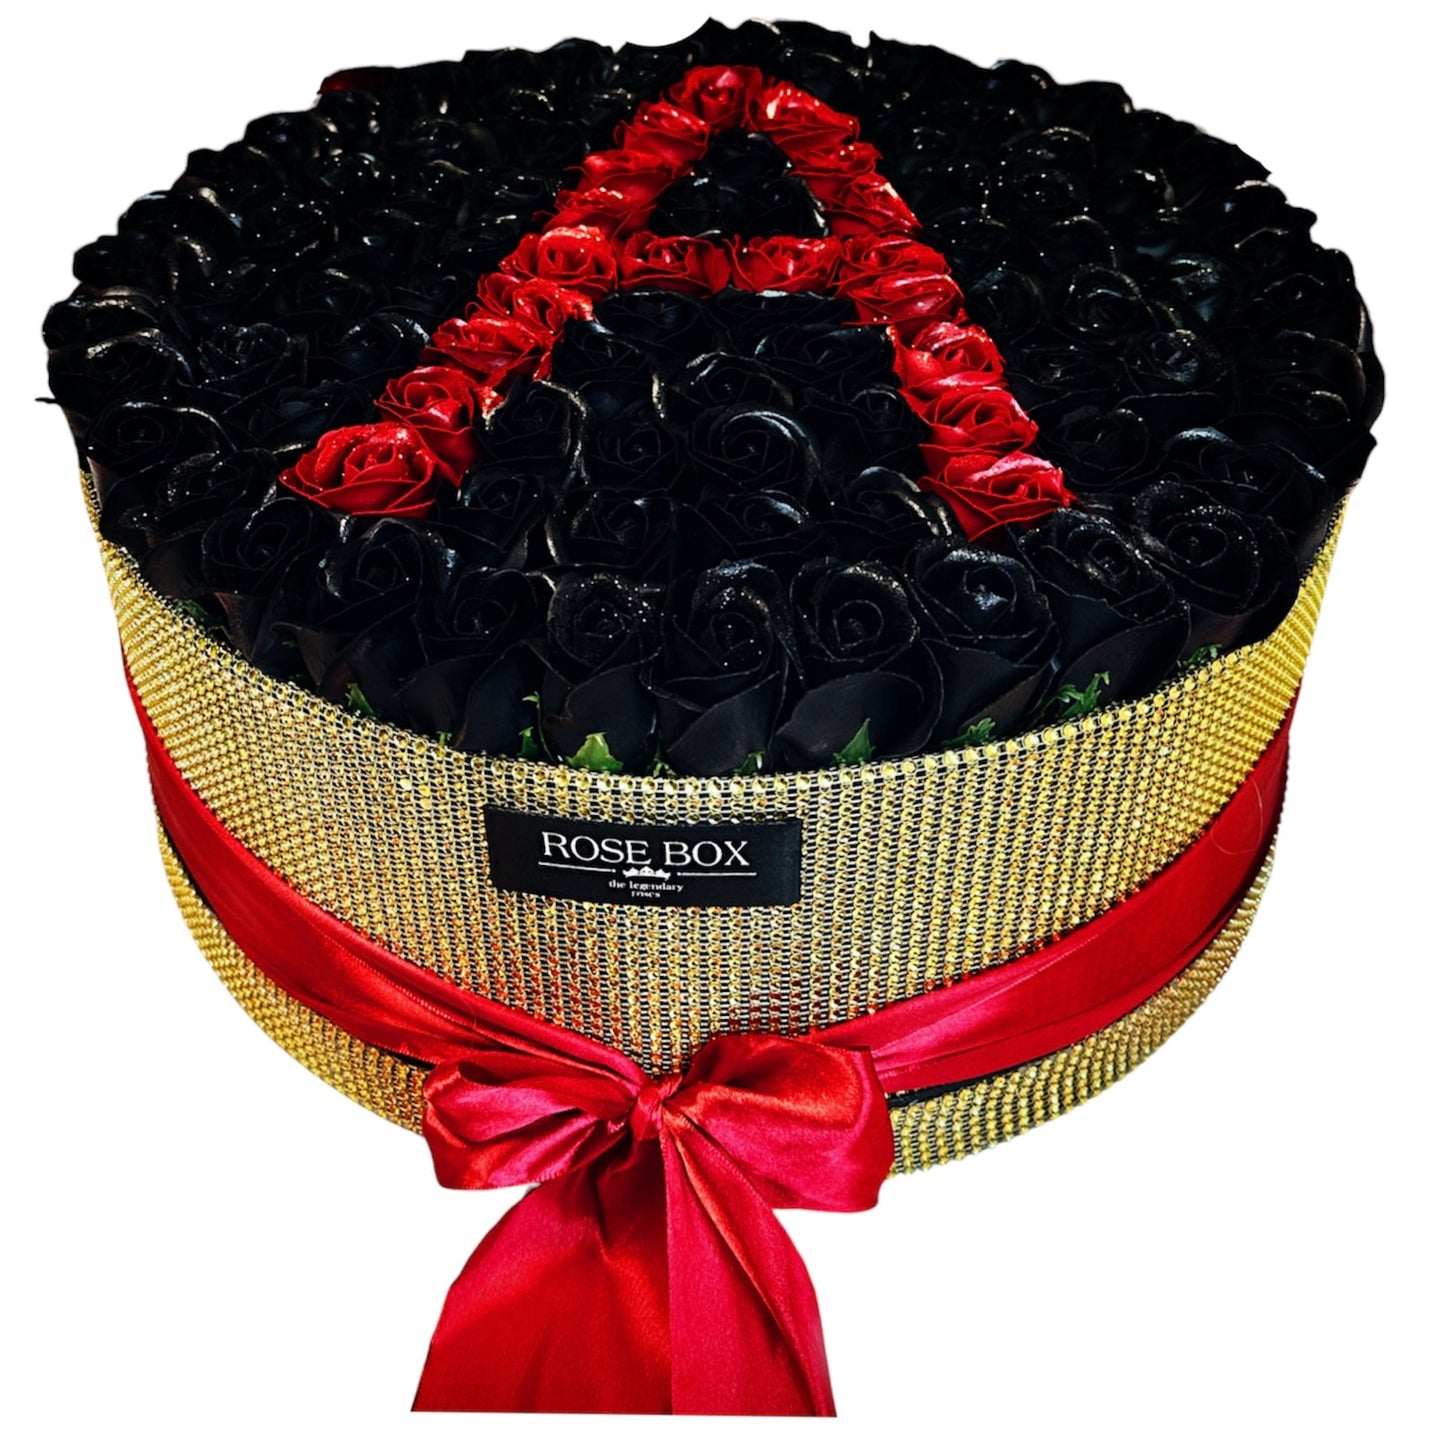 Cutie imensă cu cristale și trandafiri negru&roșu personalizată